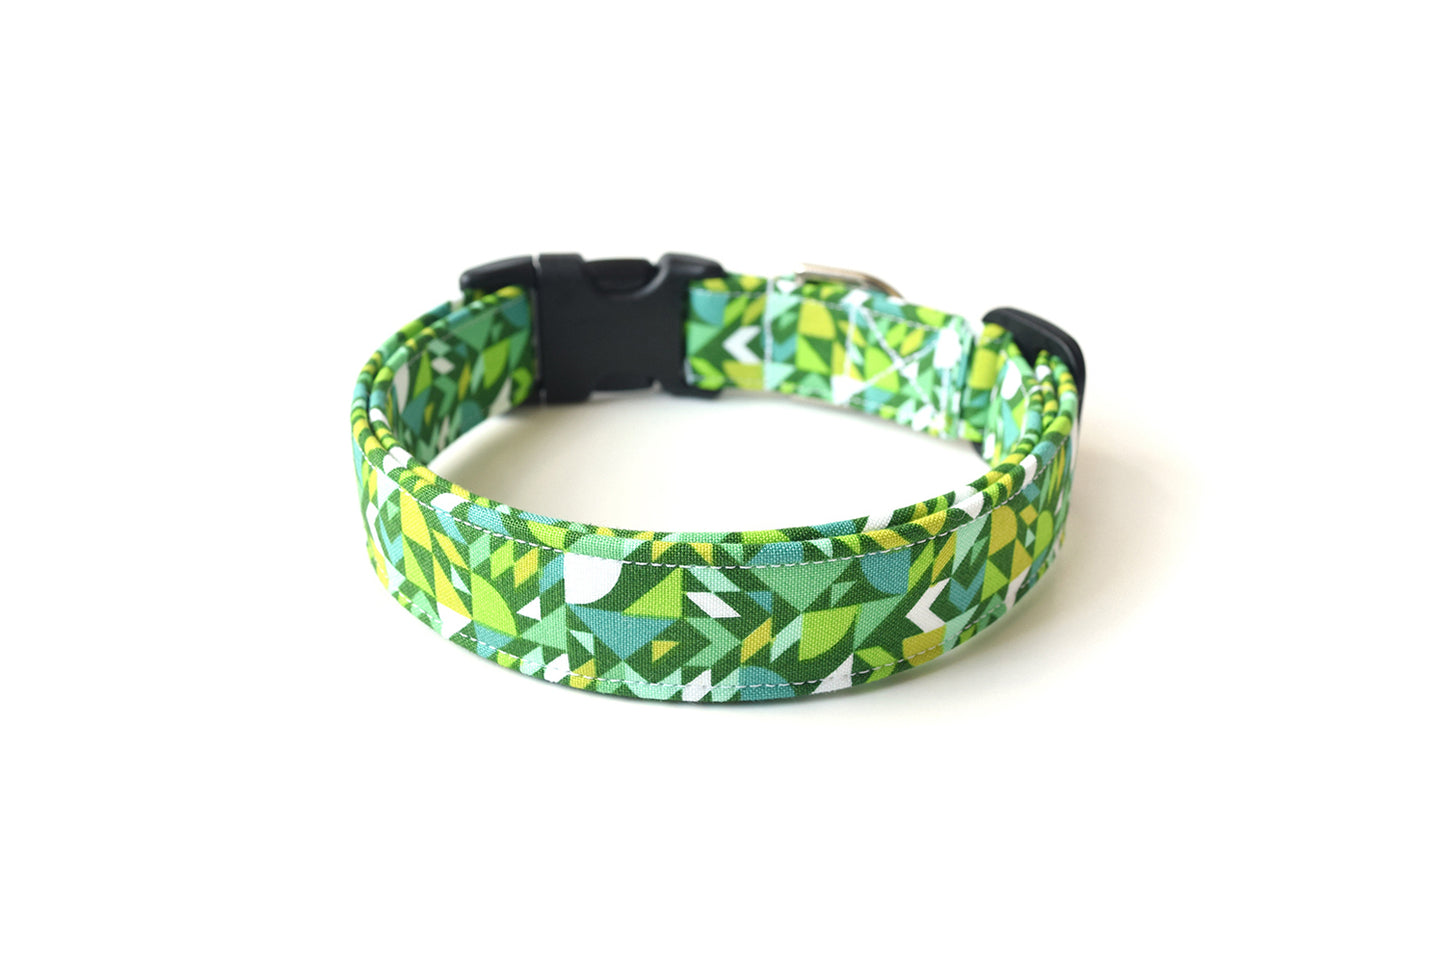 Green Geometric Shapes Dog Collar - Handmade by Kira's Pet Shop